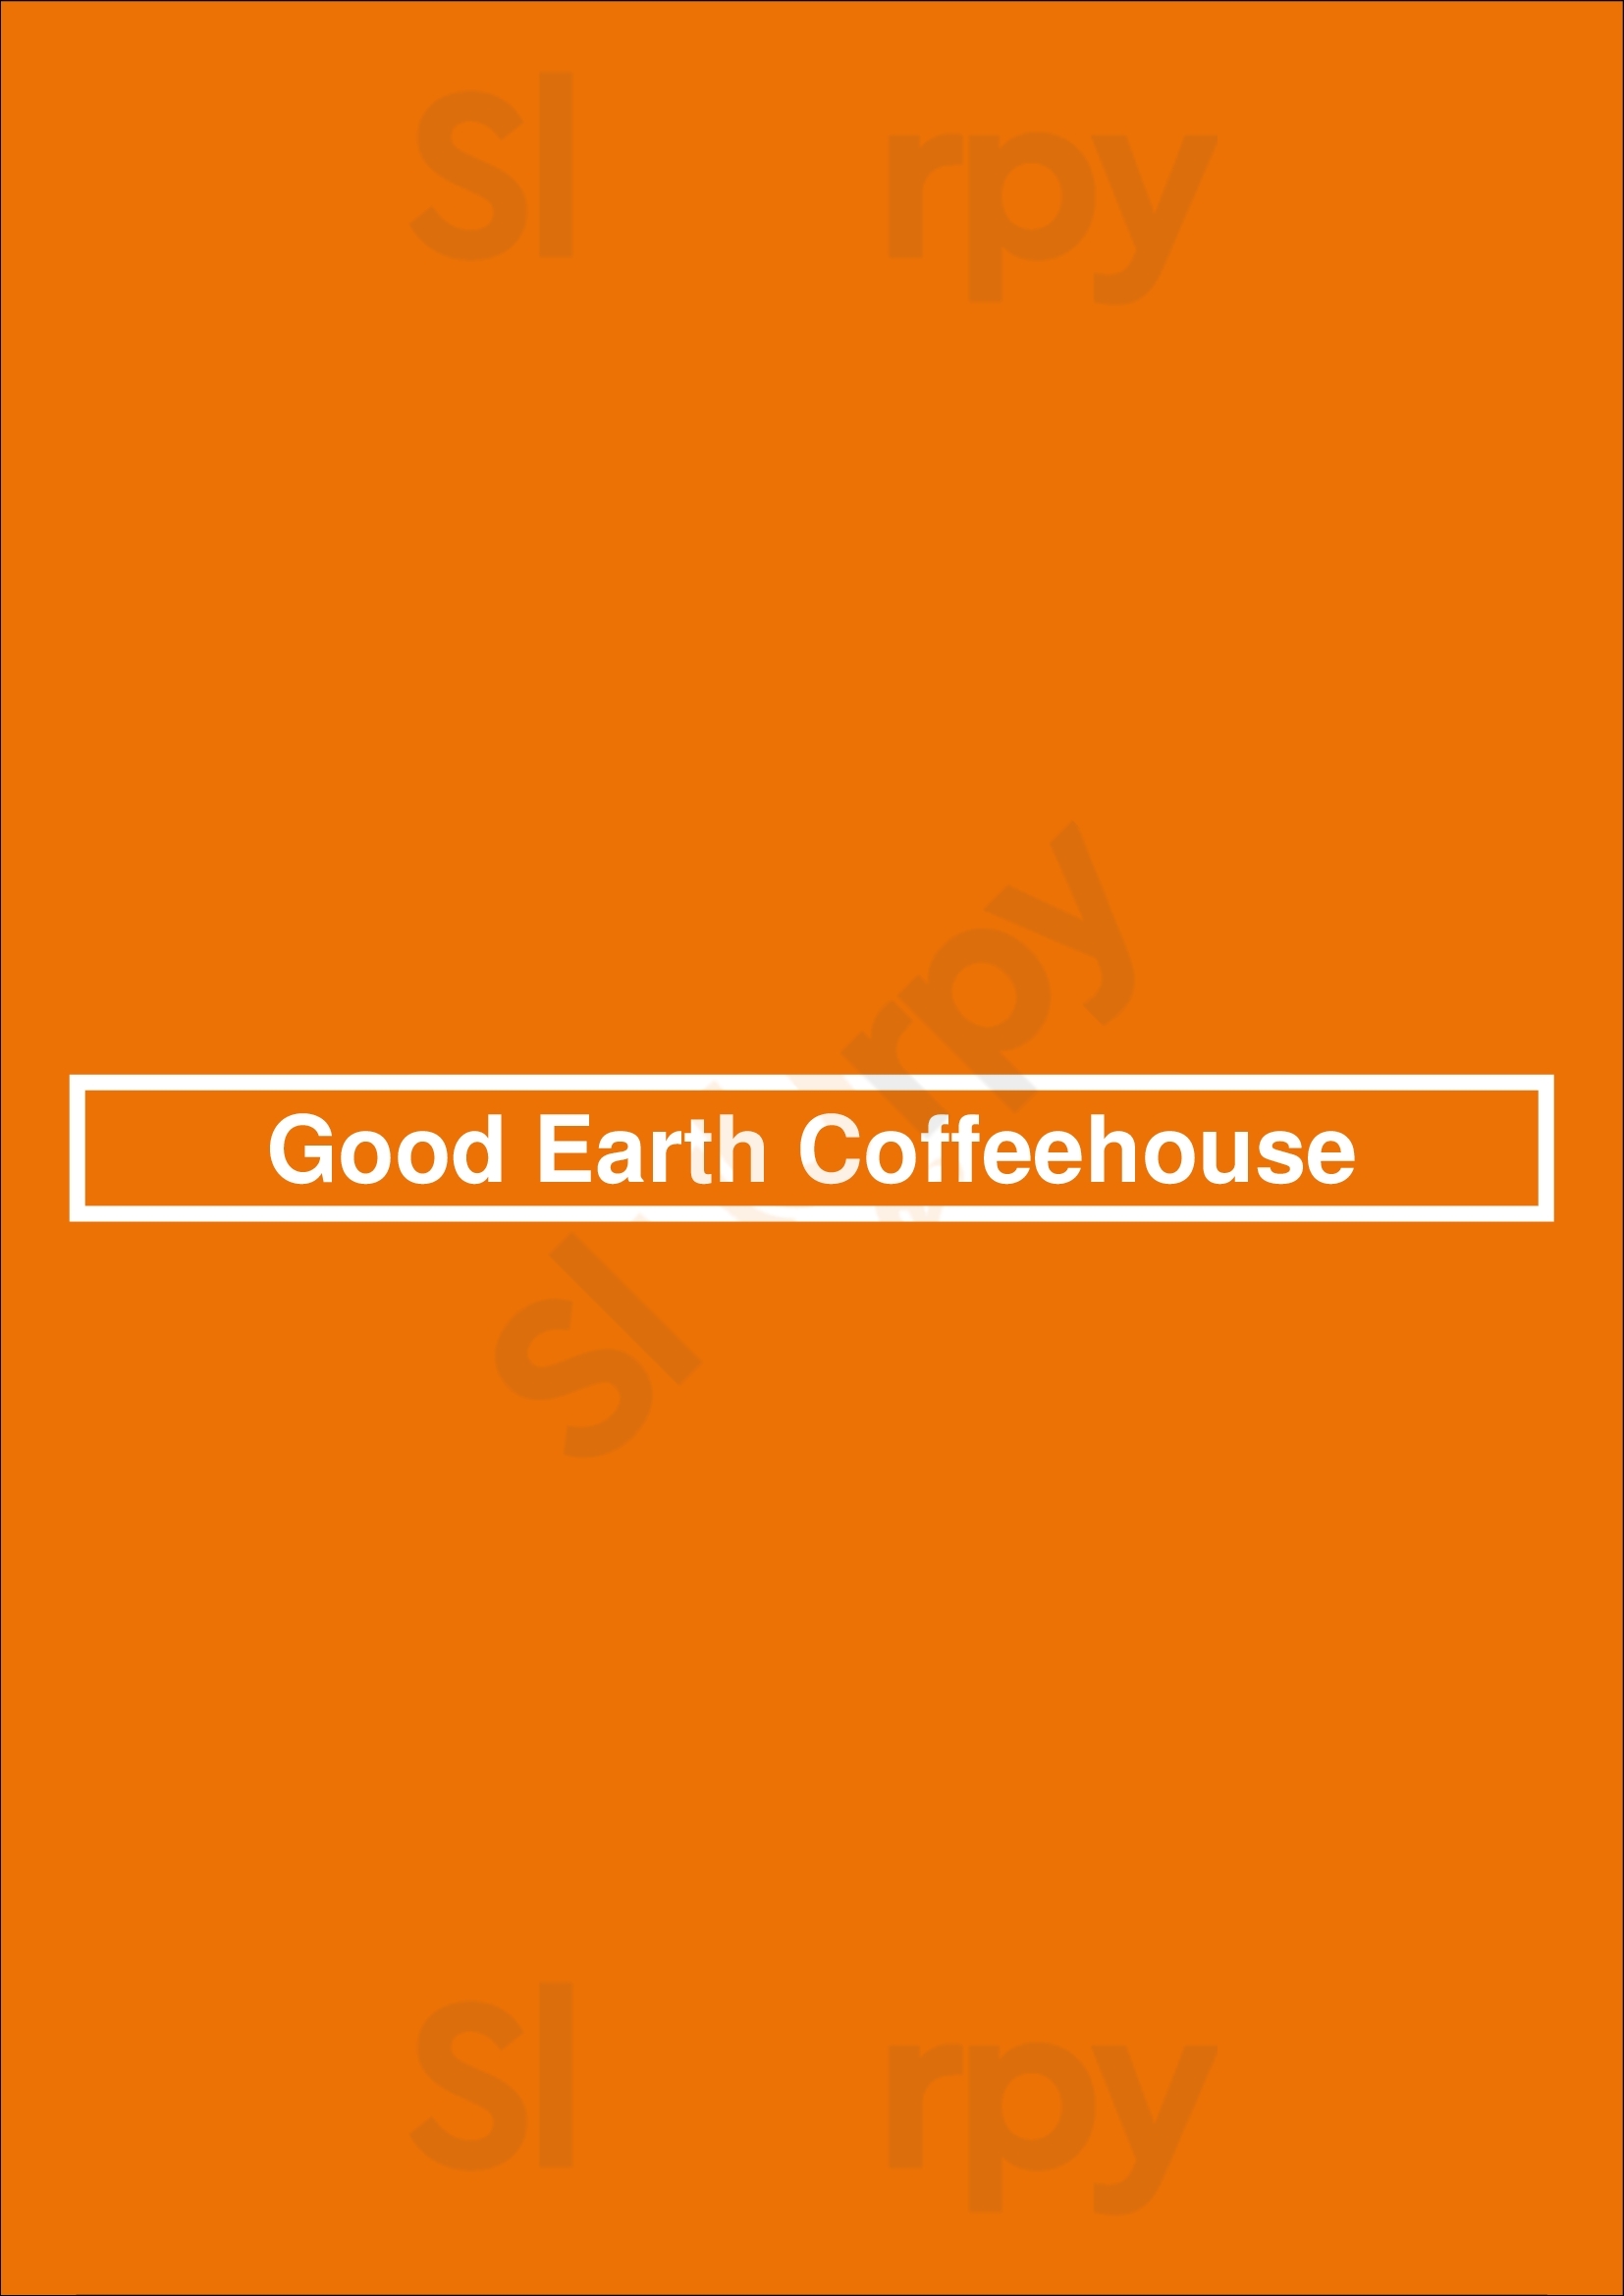 Good Earth Coffeehouse Edmonton Menu - 1